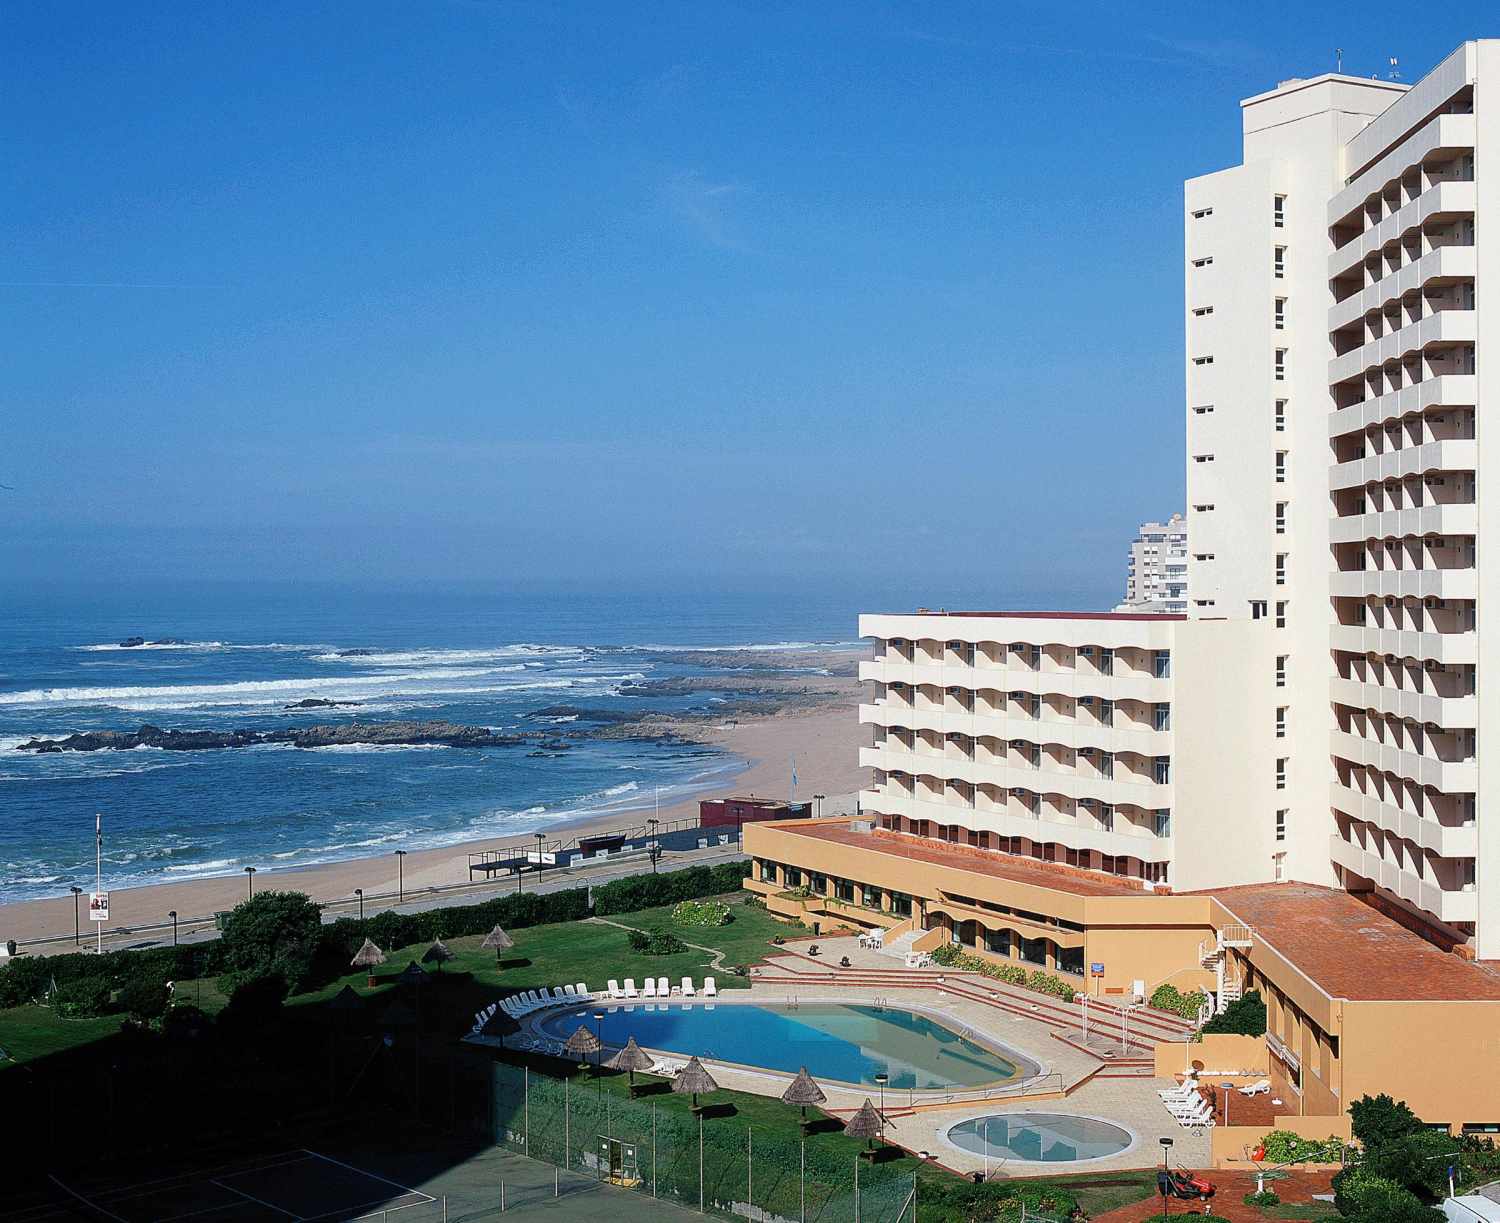 Axis Vermar Conference & Beach, Povoa de Varzim, Costa Verde, Portugal